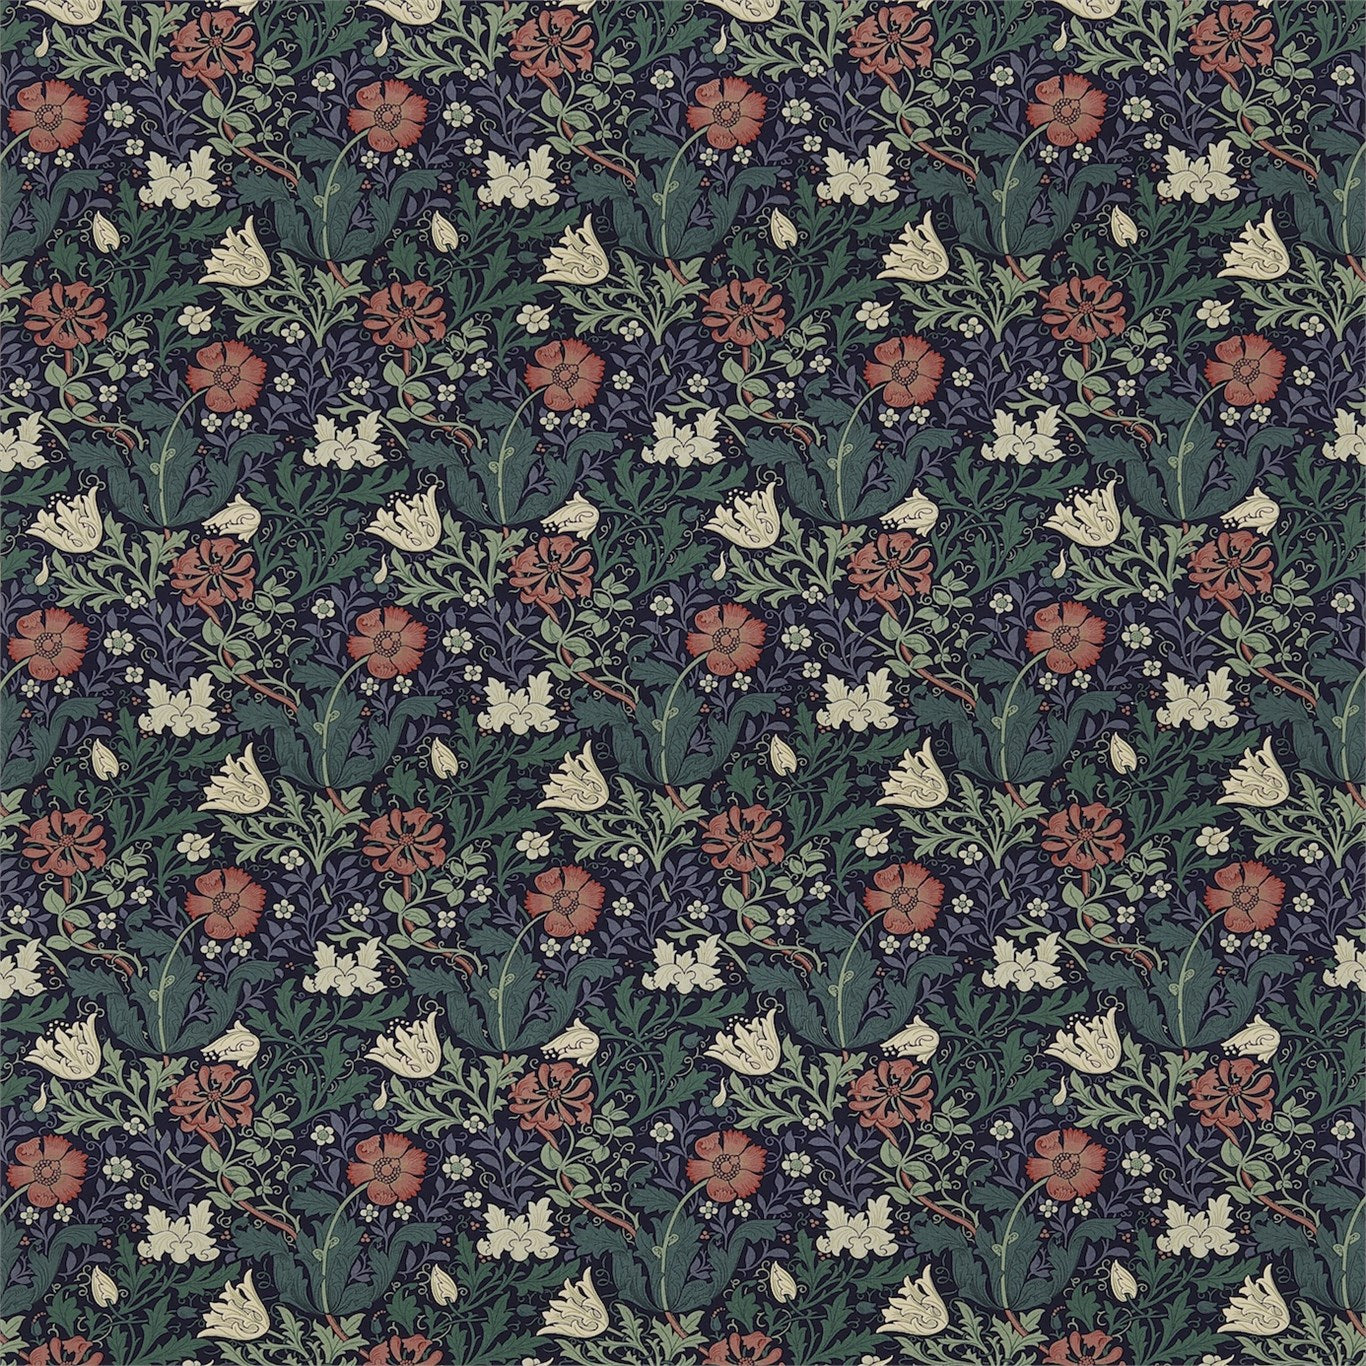 Compton Fabric by Morris & Co. - DJA196202 - Indigo/Green